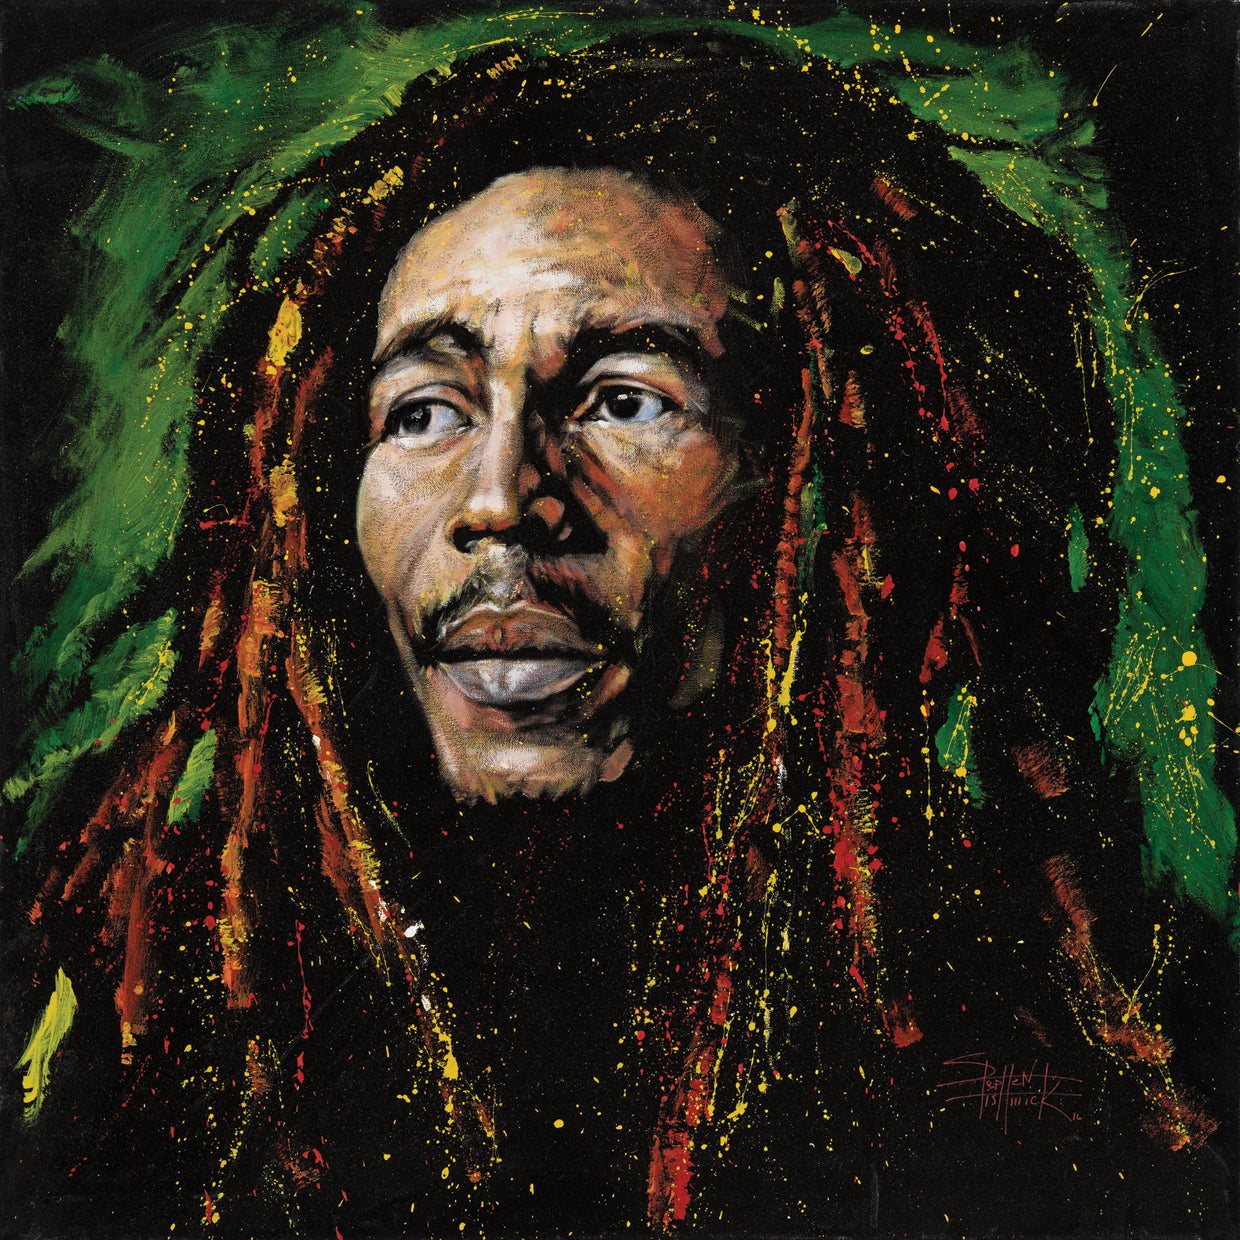 Stephen Fishwick's Bob Marley I